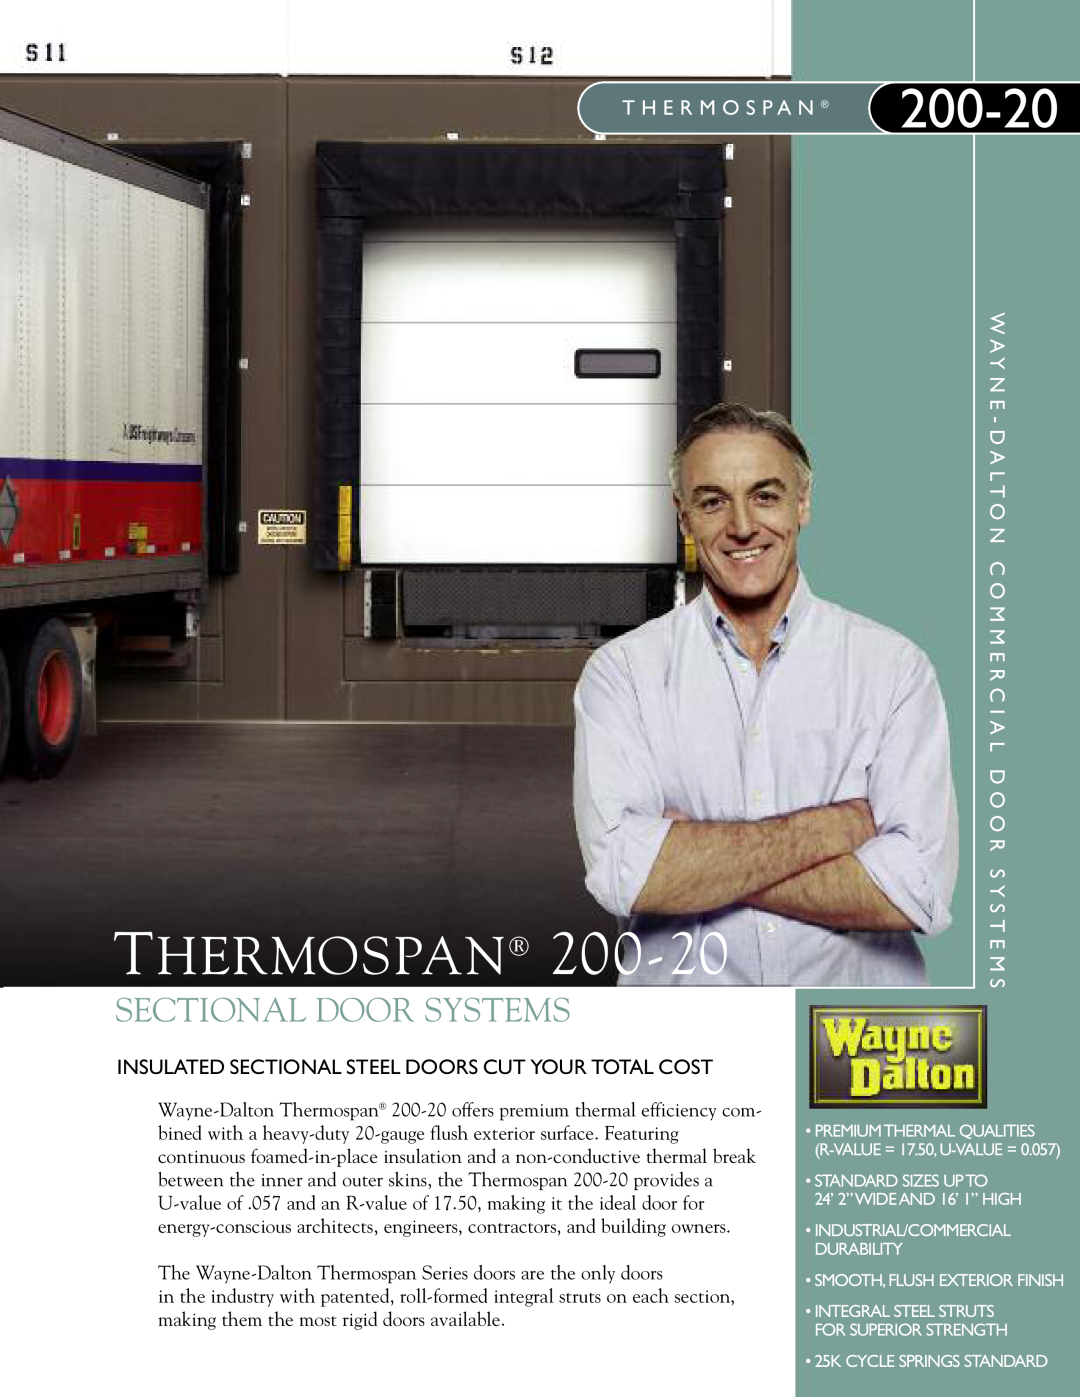 Wayne-Dalton 200-20 manual Thermospan, Sectional Door Systems, T H E R M O S P A N 